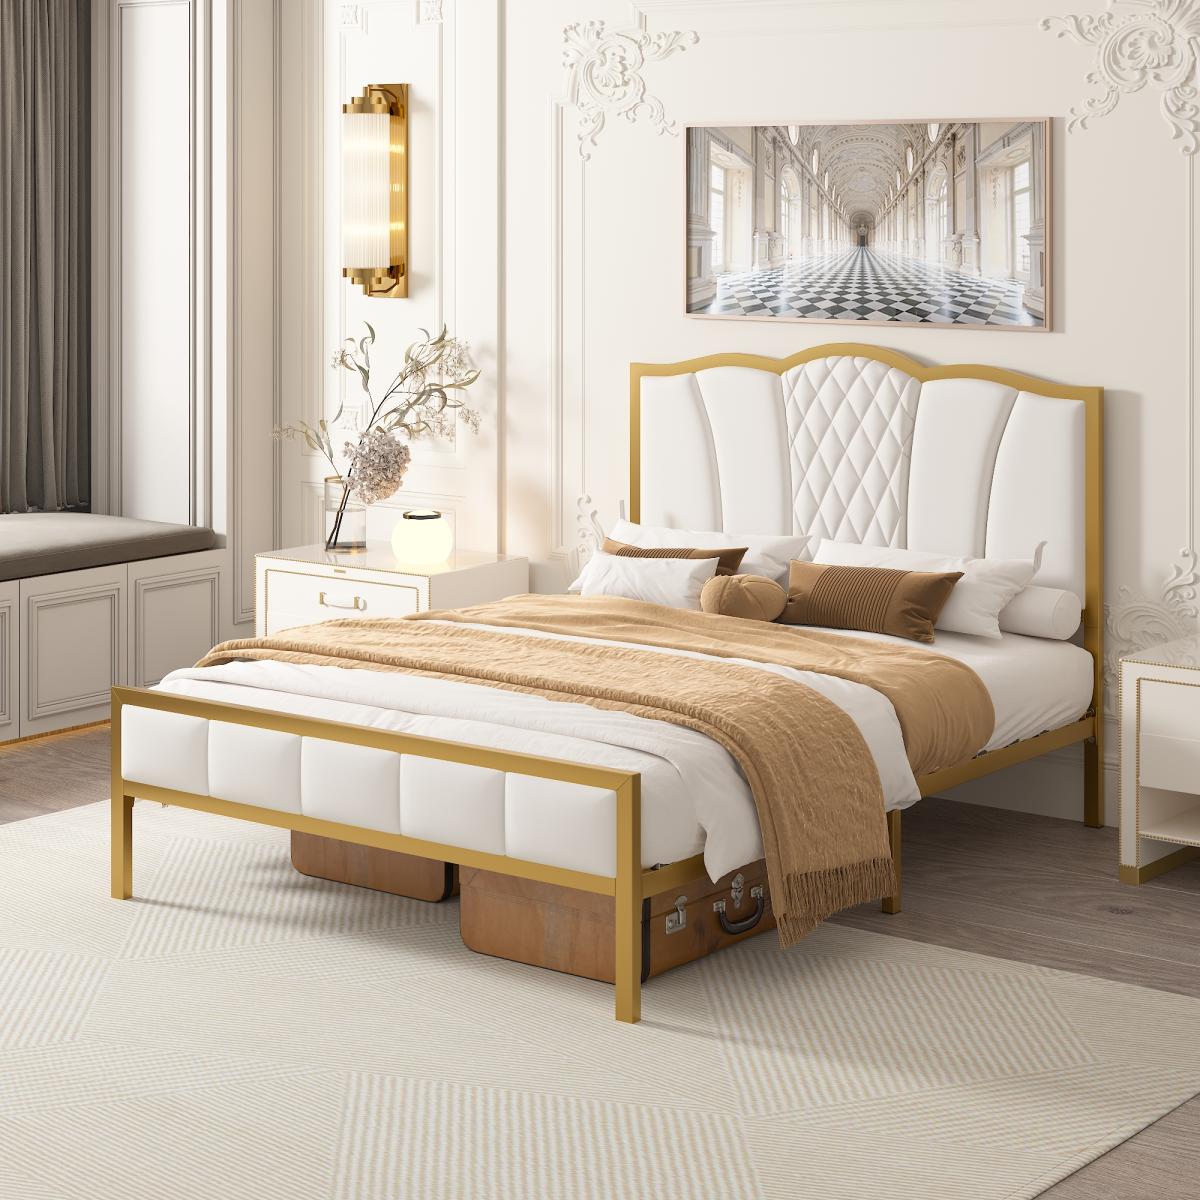 Full Size Bed Frame, Modern Upholstered Bed Frame with Tufted Headboard, Golden Metal Platform Bed Frame with Wood Slat Support, Noise Free, No Box Spring Needed,Beige